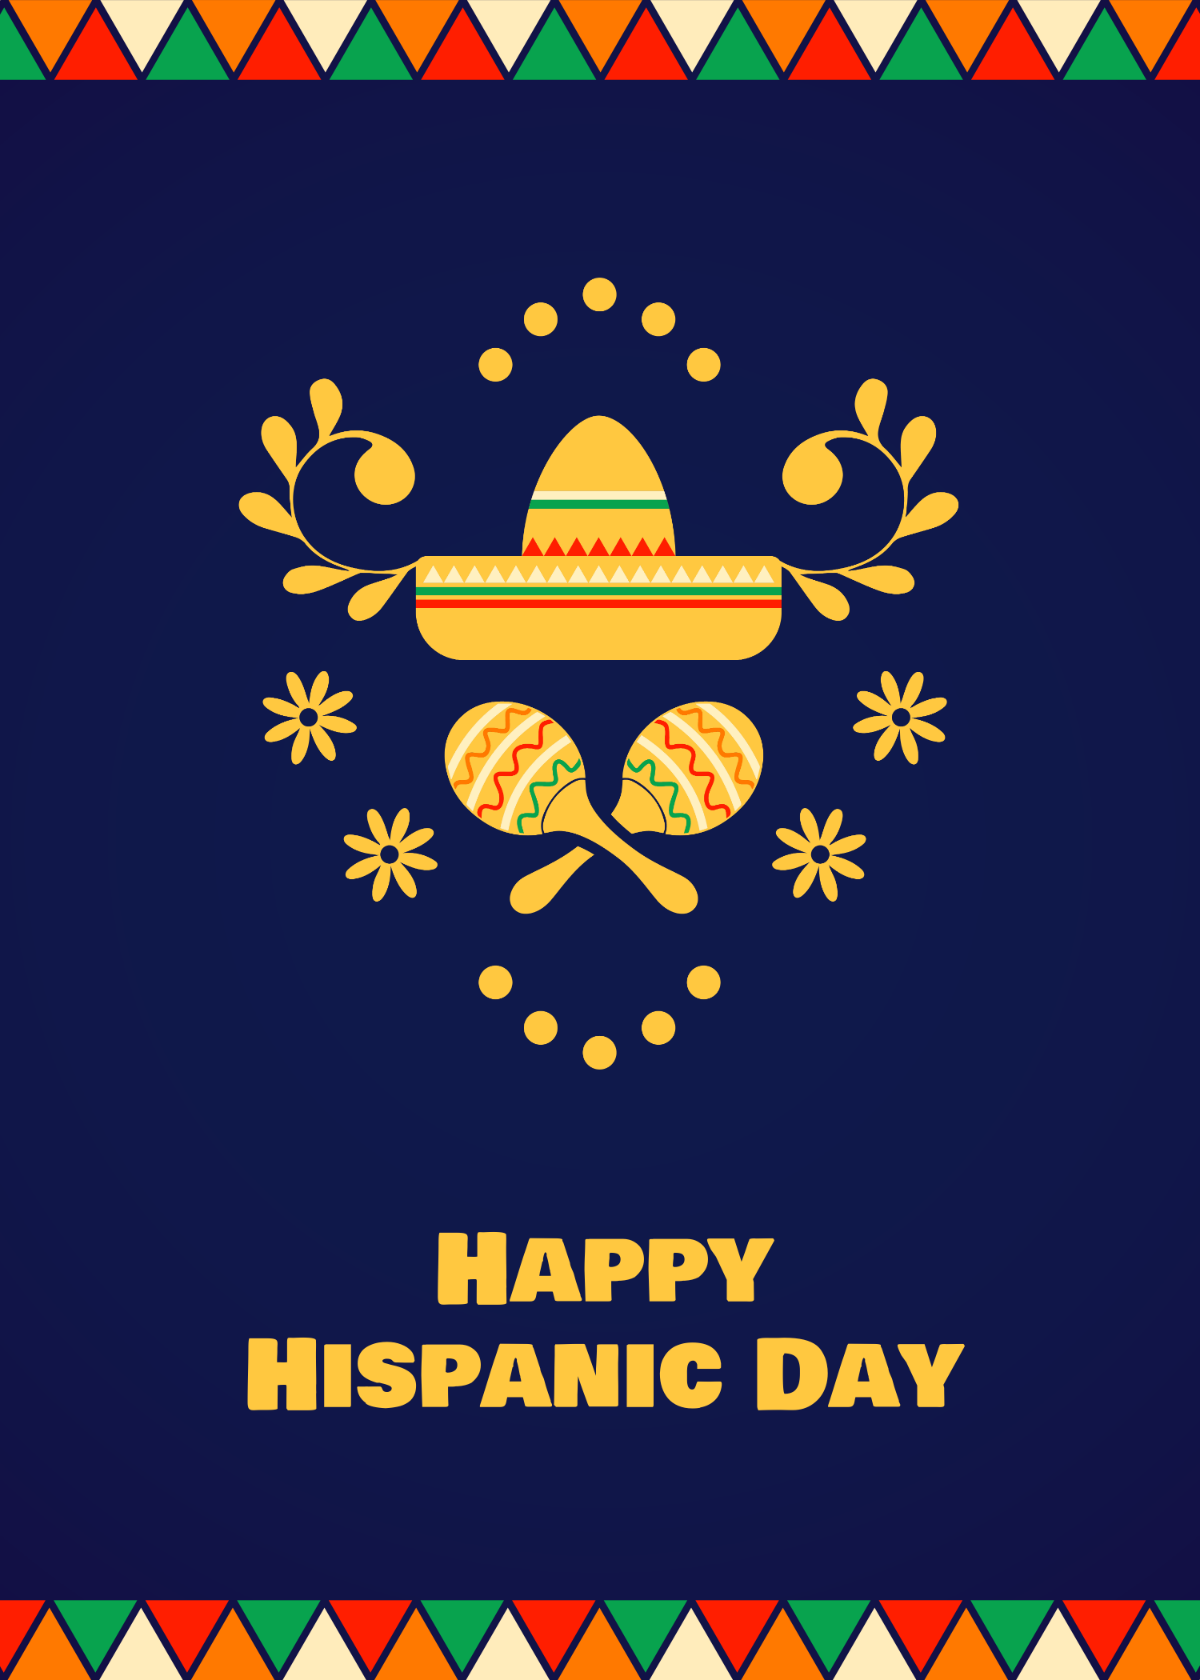 Hispanic Day Greeting Card Template